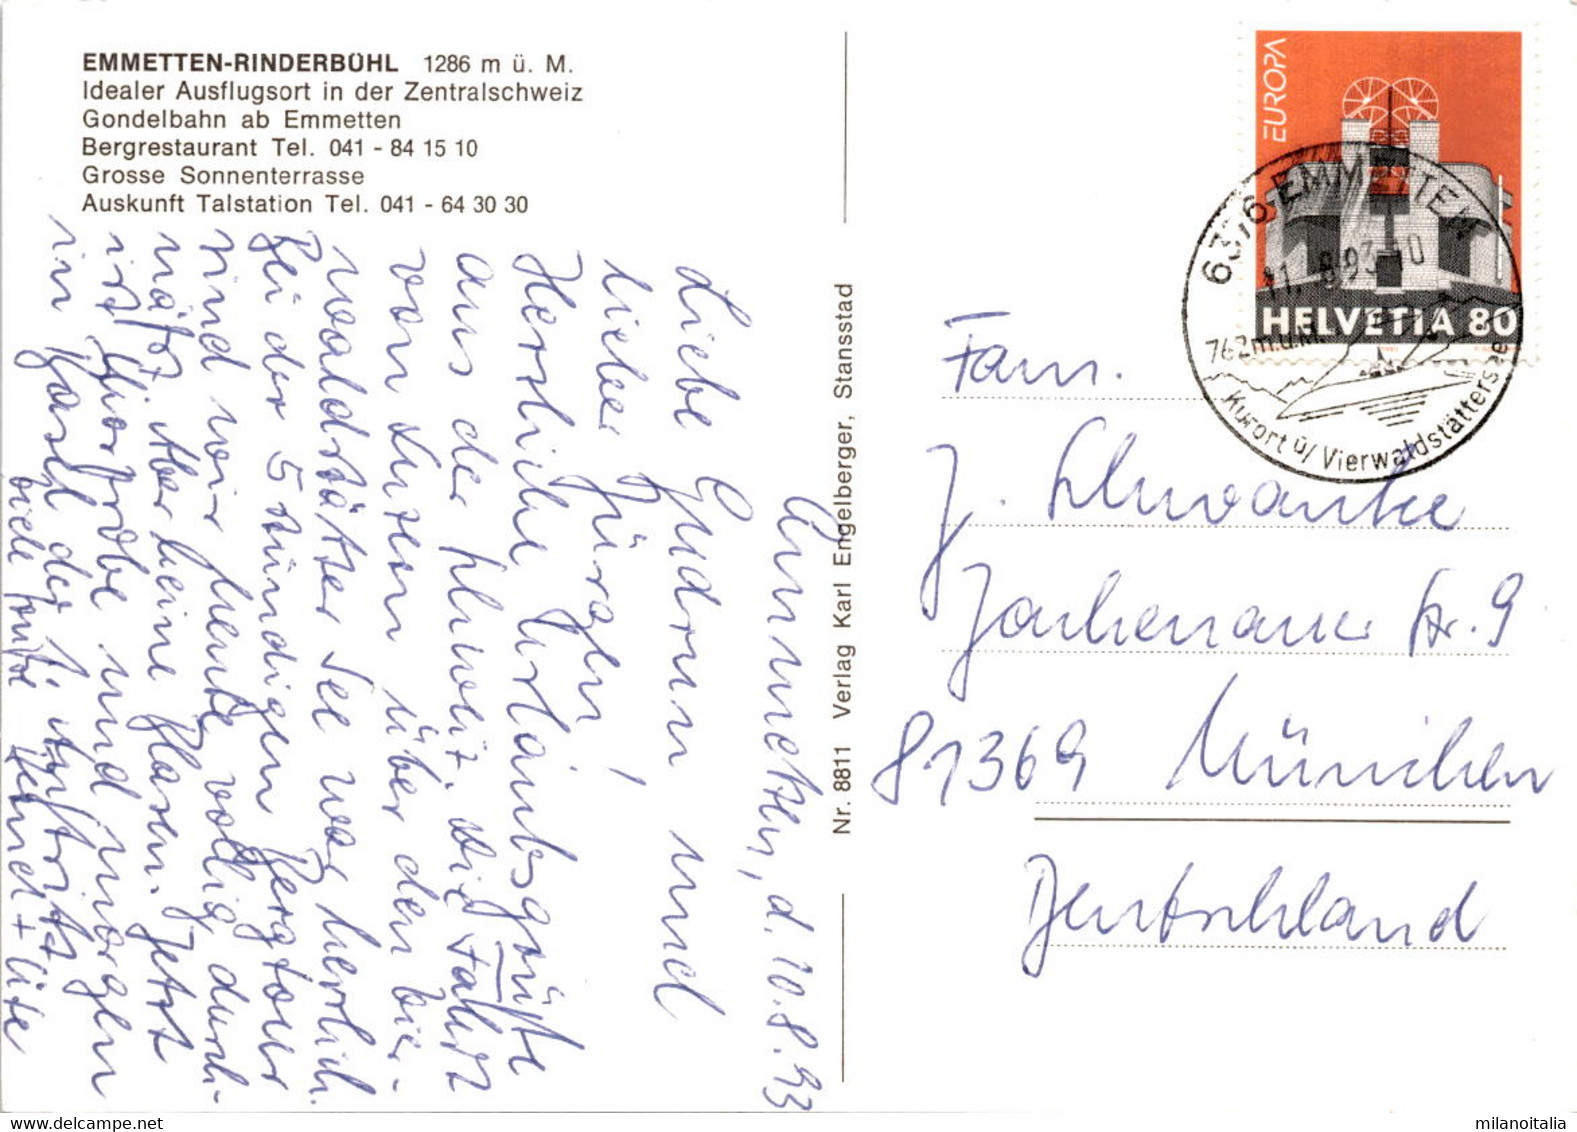 Emmetten-Rinderbühl - Gondelbahn Ab Emmetten (8811) * 11. 8. 1993 - Emmetten